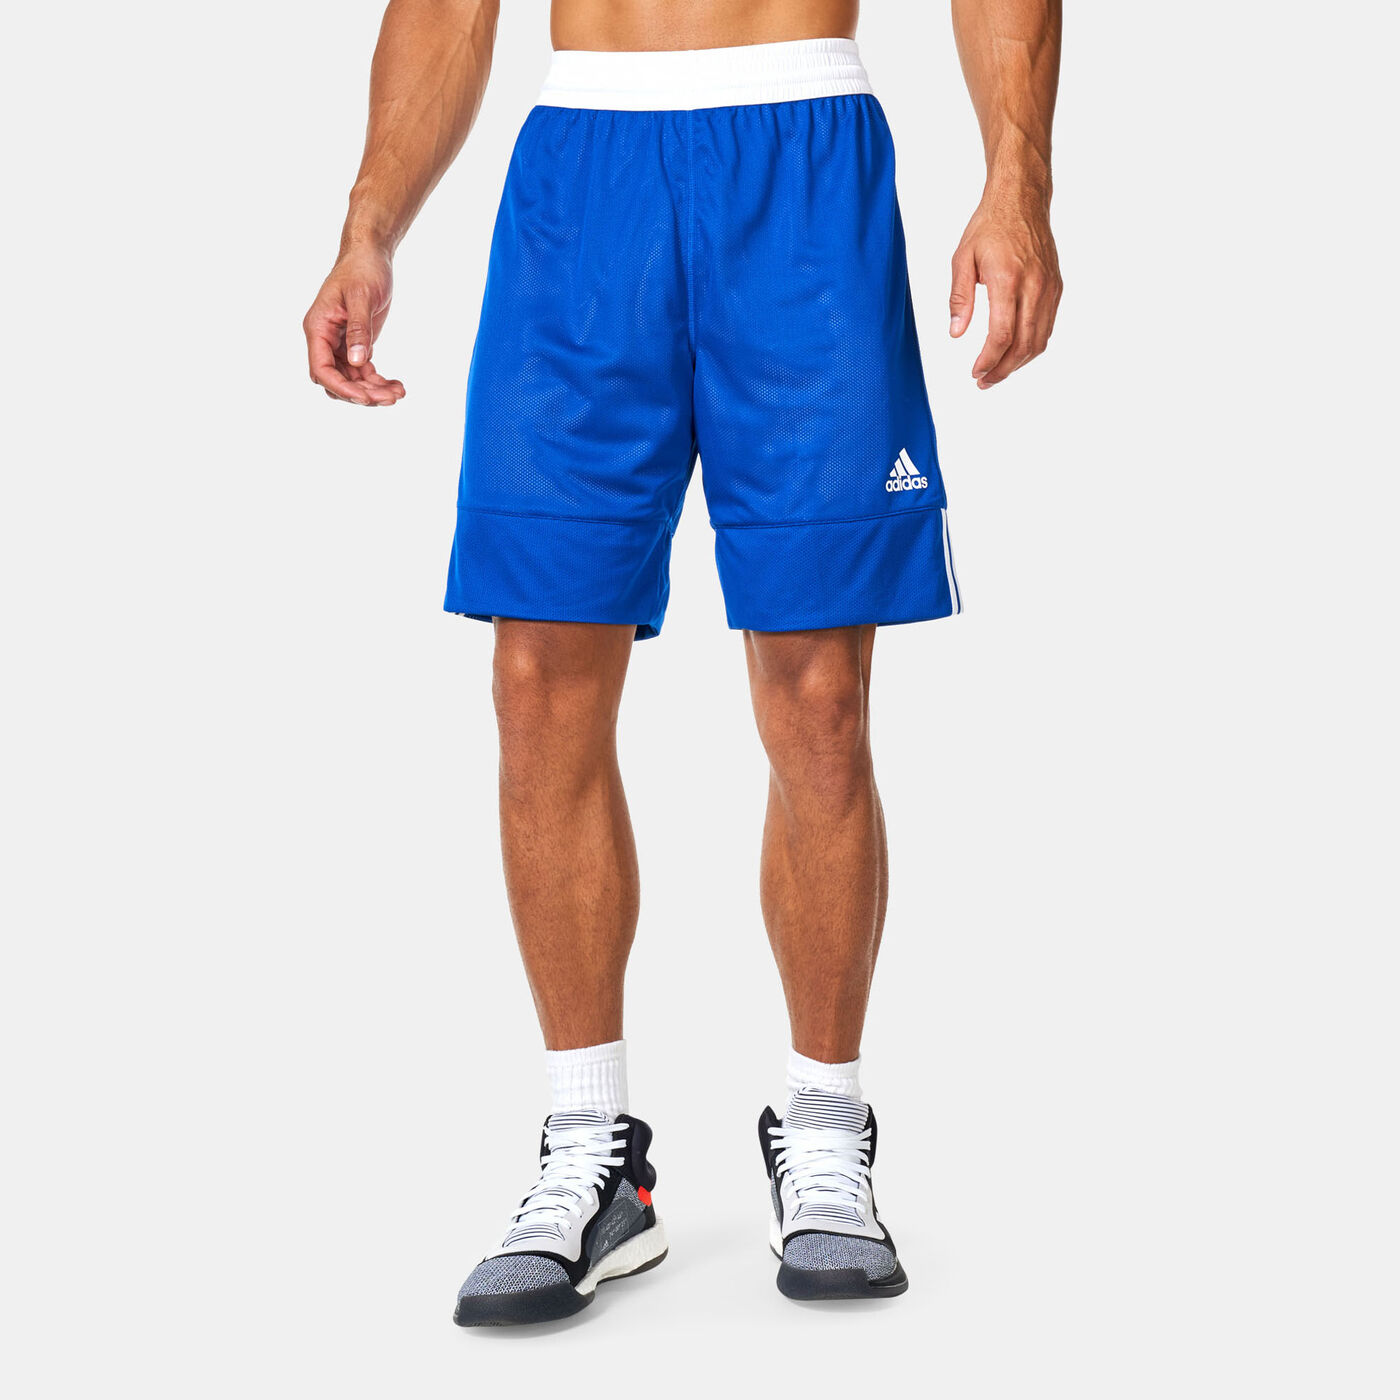 Men's 3G Speed Reversible Basketball Shorts